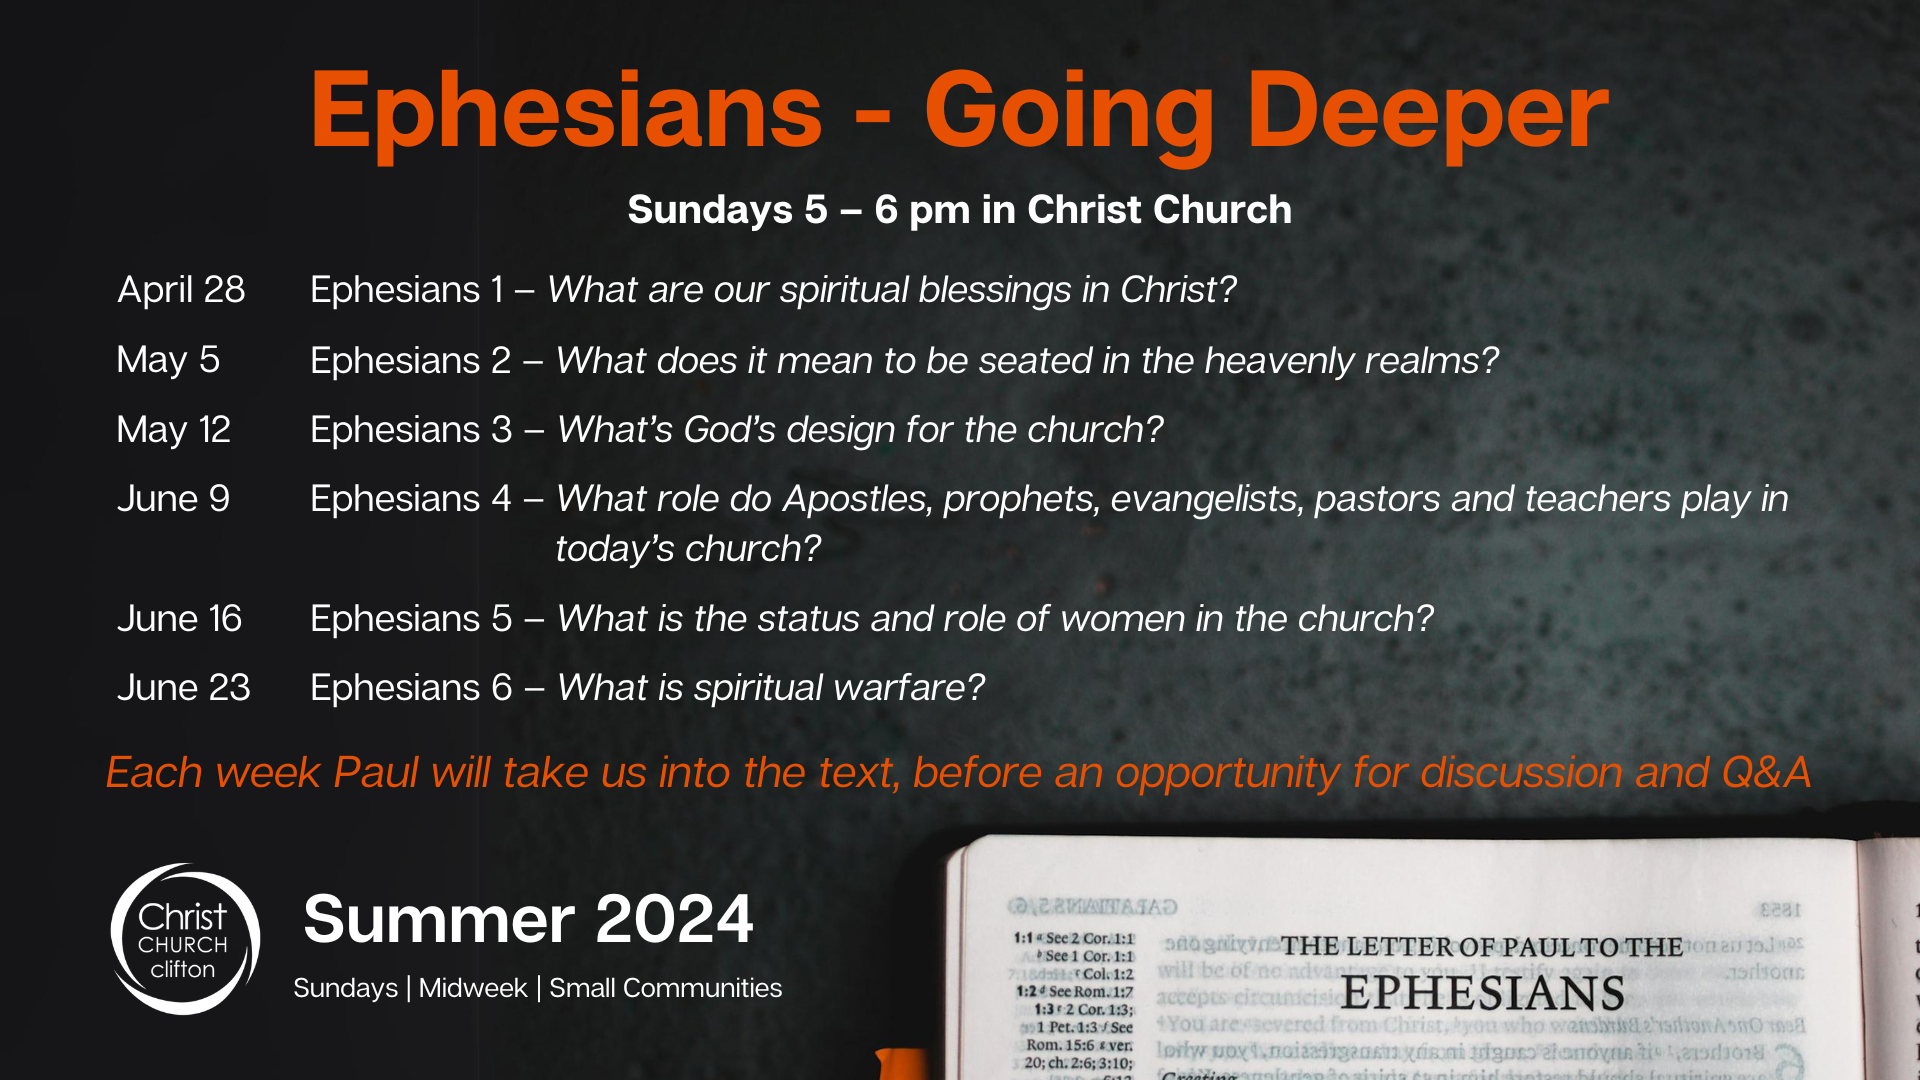 Ephesians - Going Deeper (1920